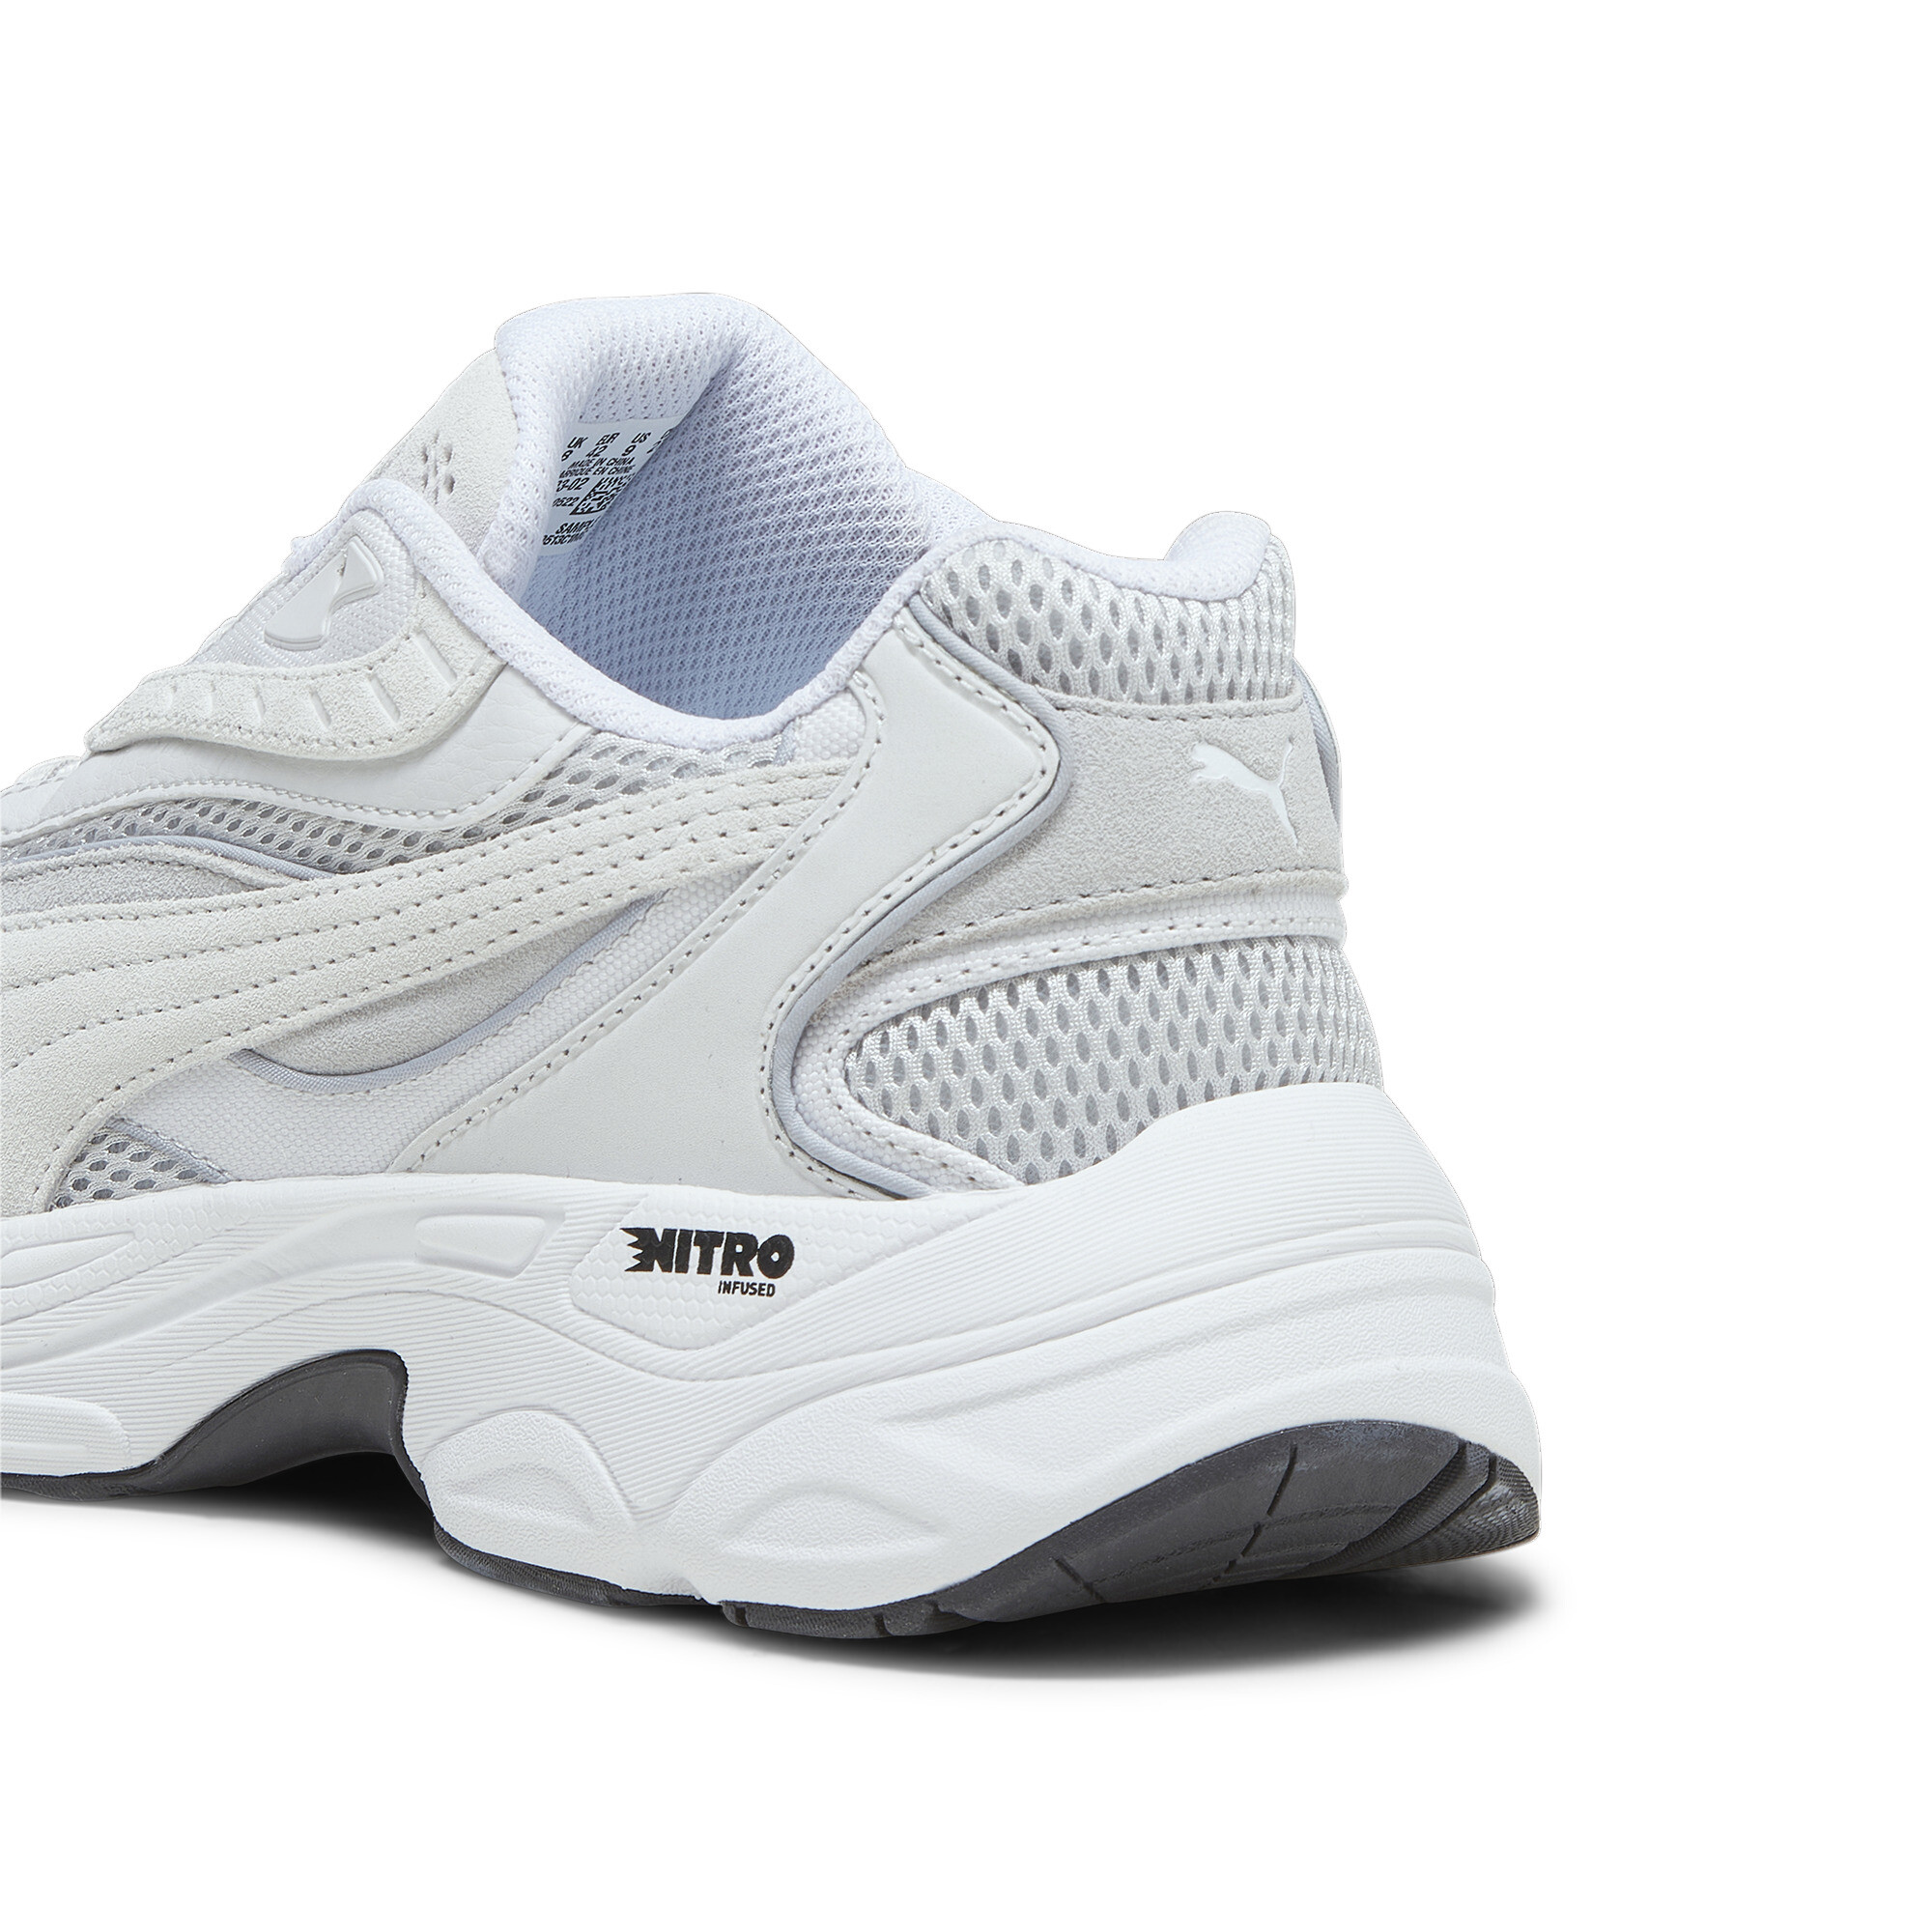 Puma Teveris NITRO Vortex Sneakers, Gray, Size 36, Shoes